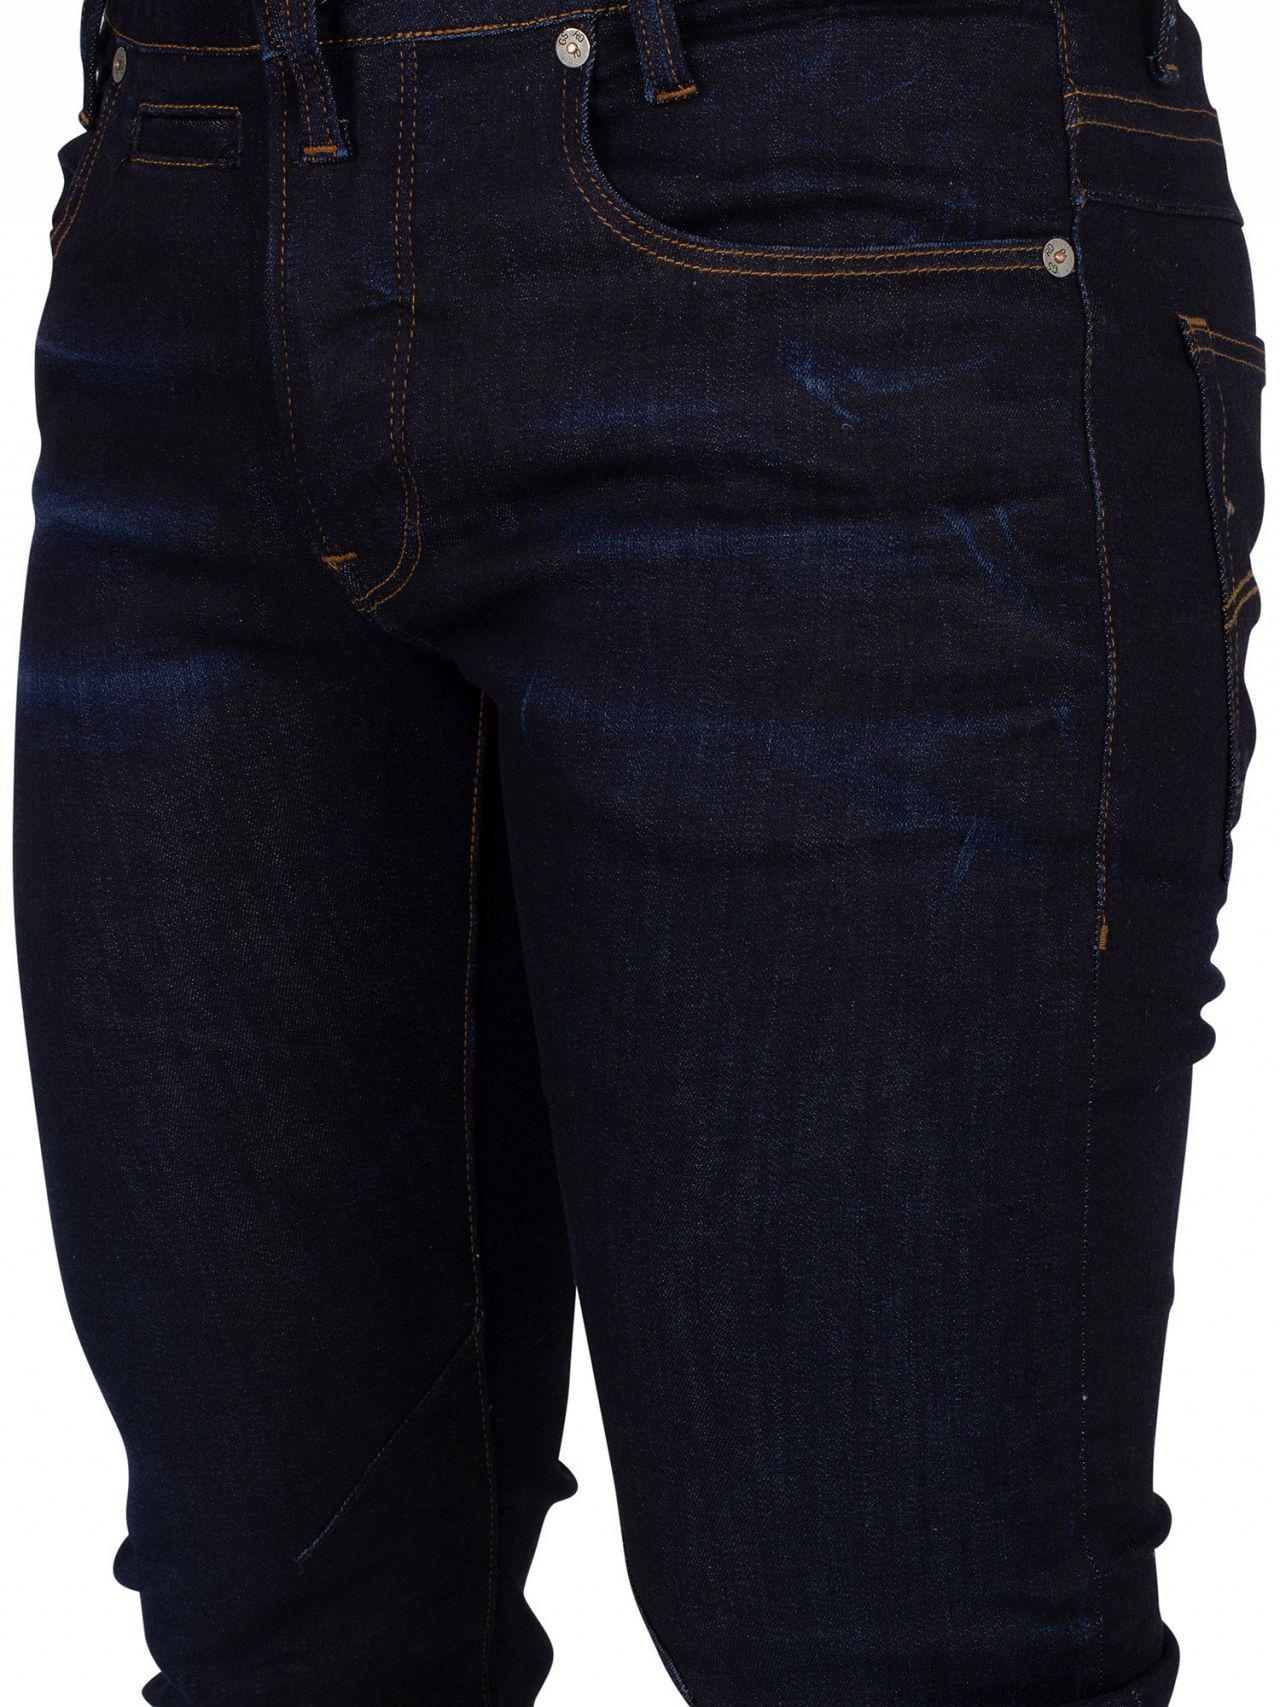 G-Star RAW Denim Dark Aged D-staq 5 Pocket Slim Fit Jeans in Blue for Men -  Lyst